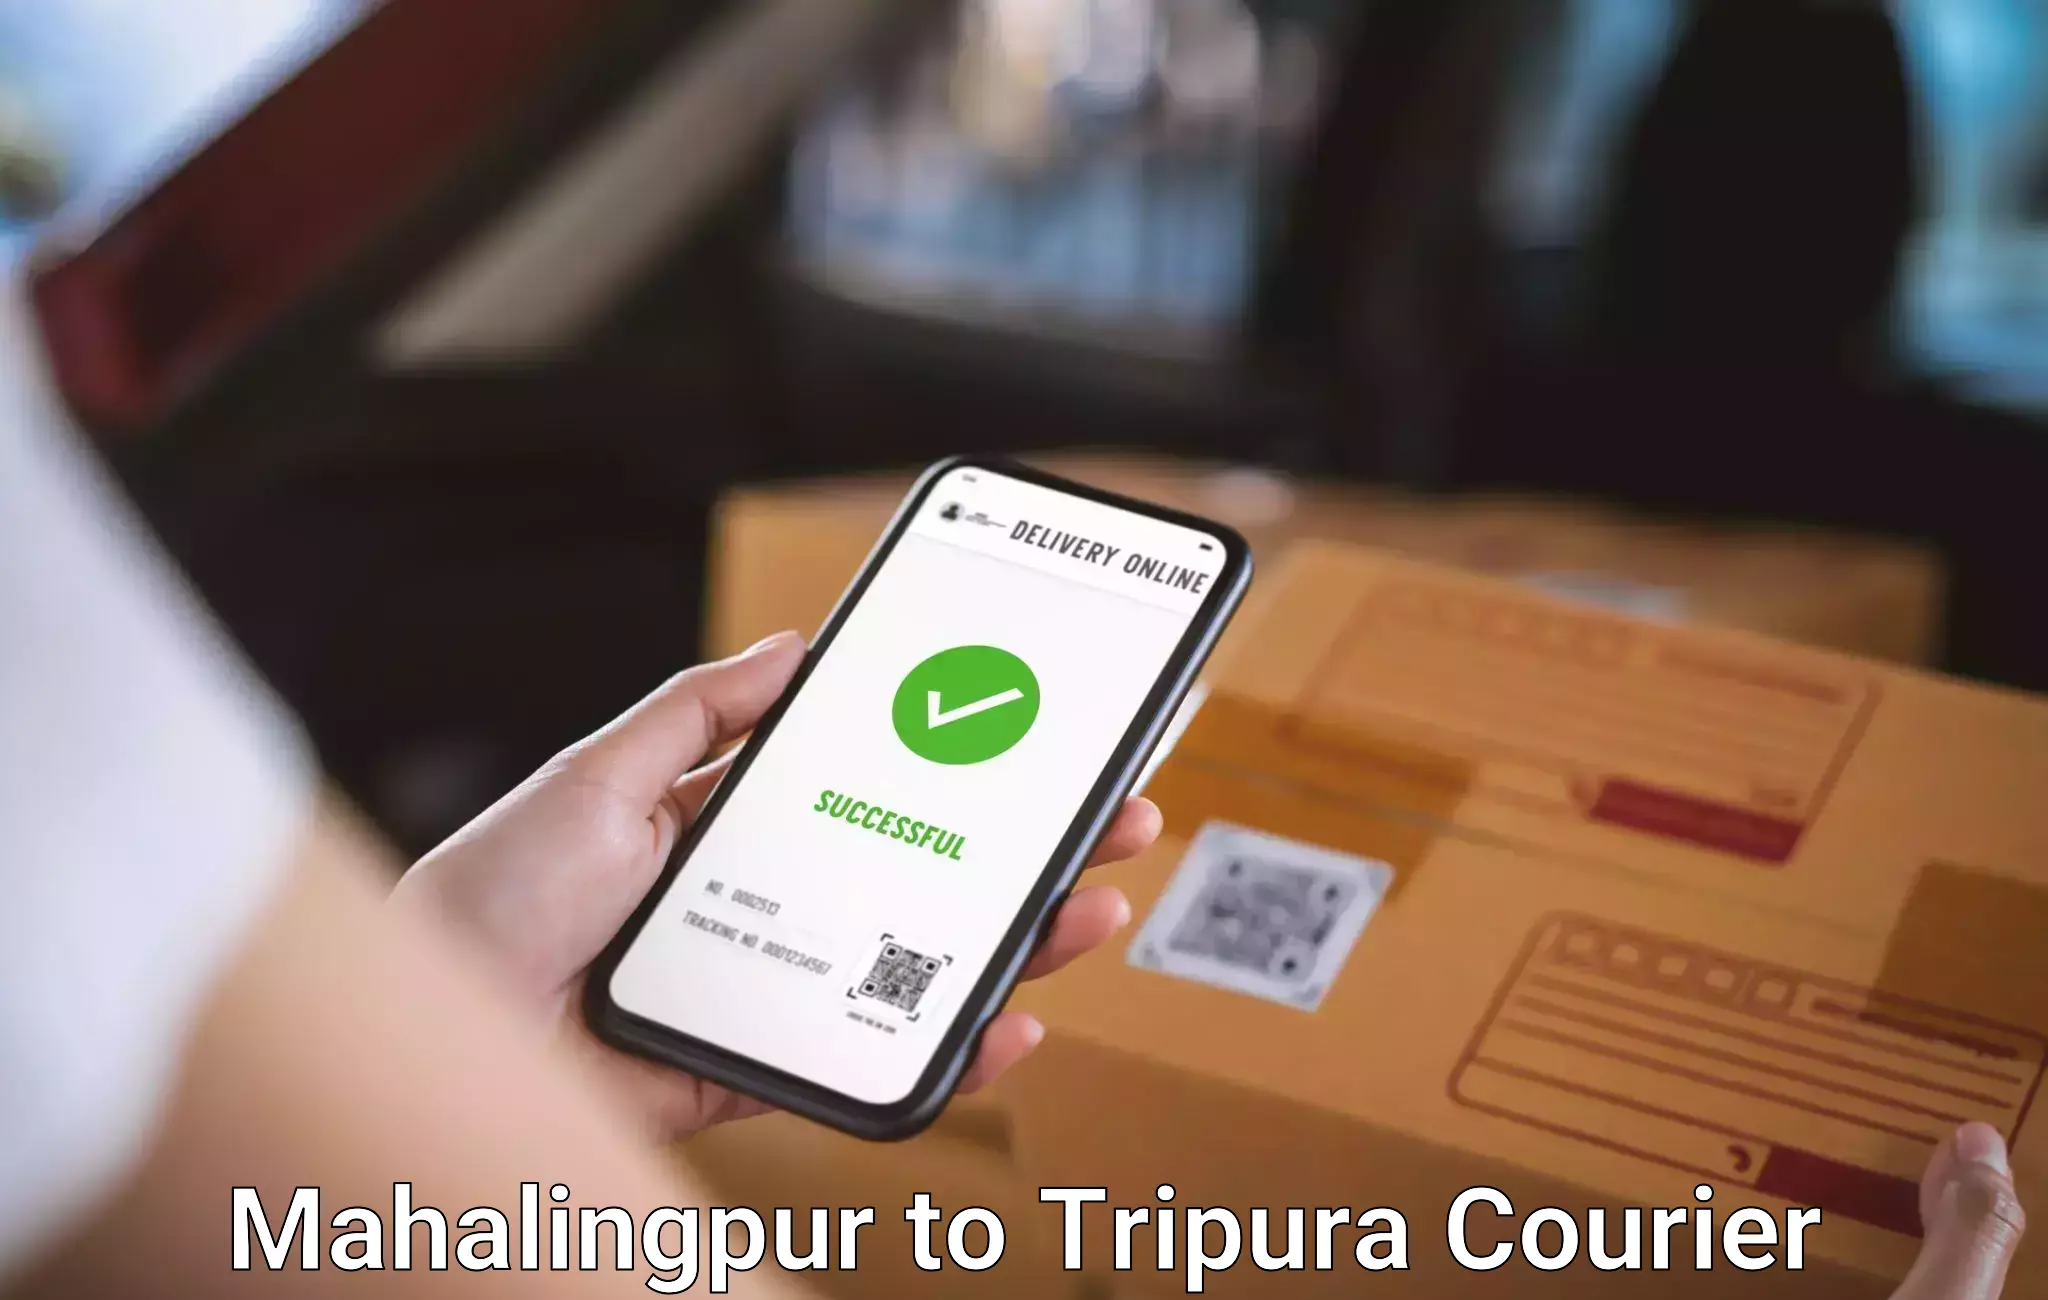 Baggage relocation service Mahalingpur to North Tripura